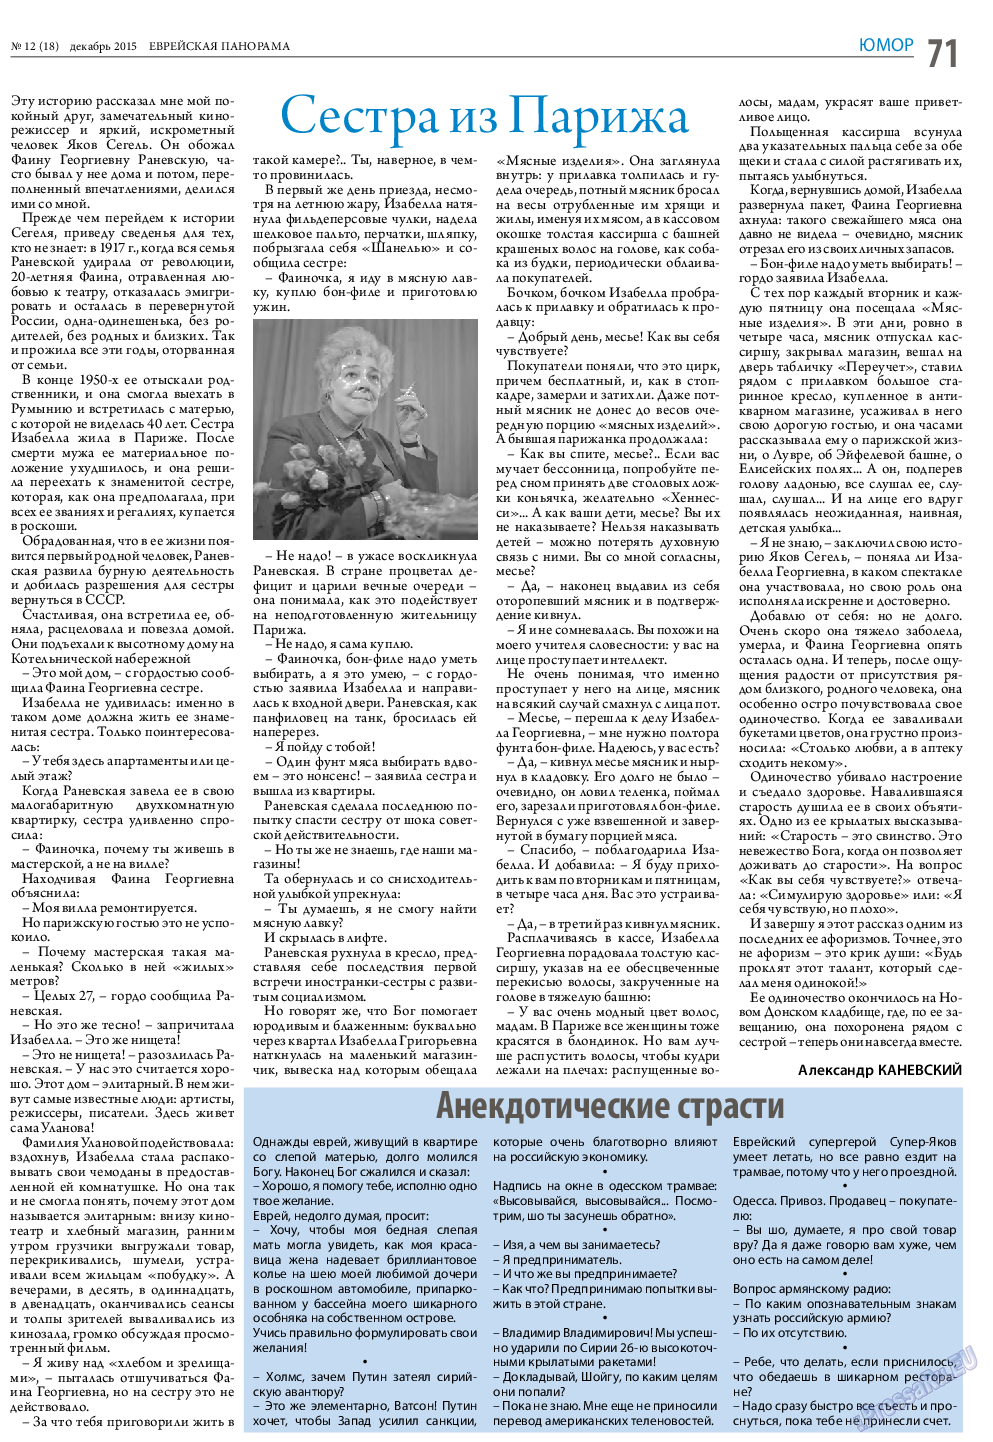 Еврейская панорама, газета. 2015 №12 стр.71